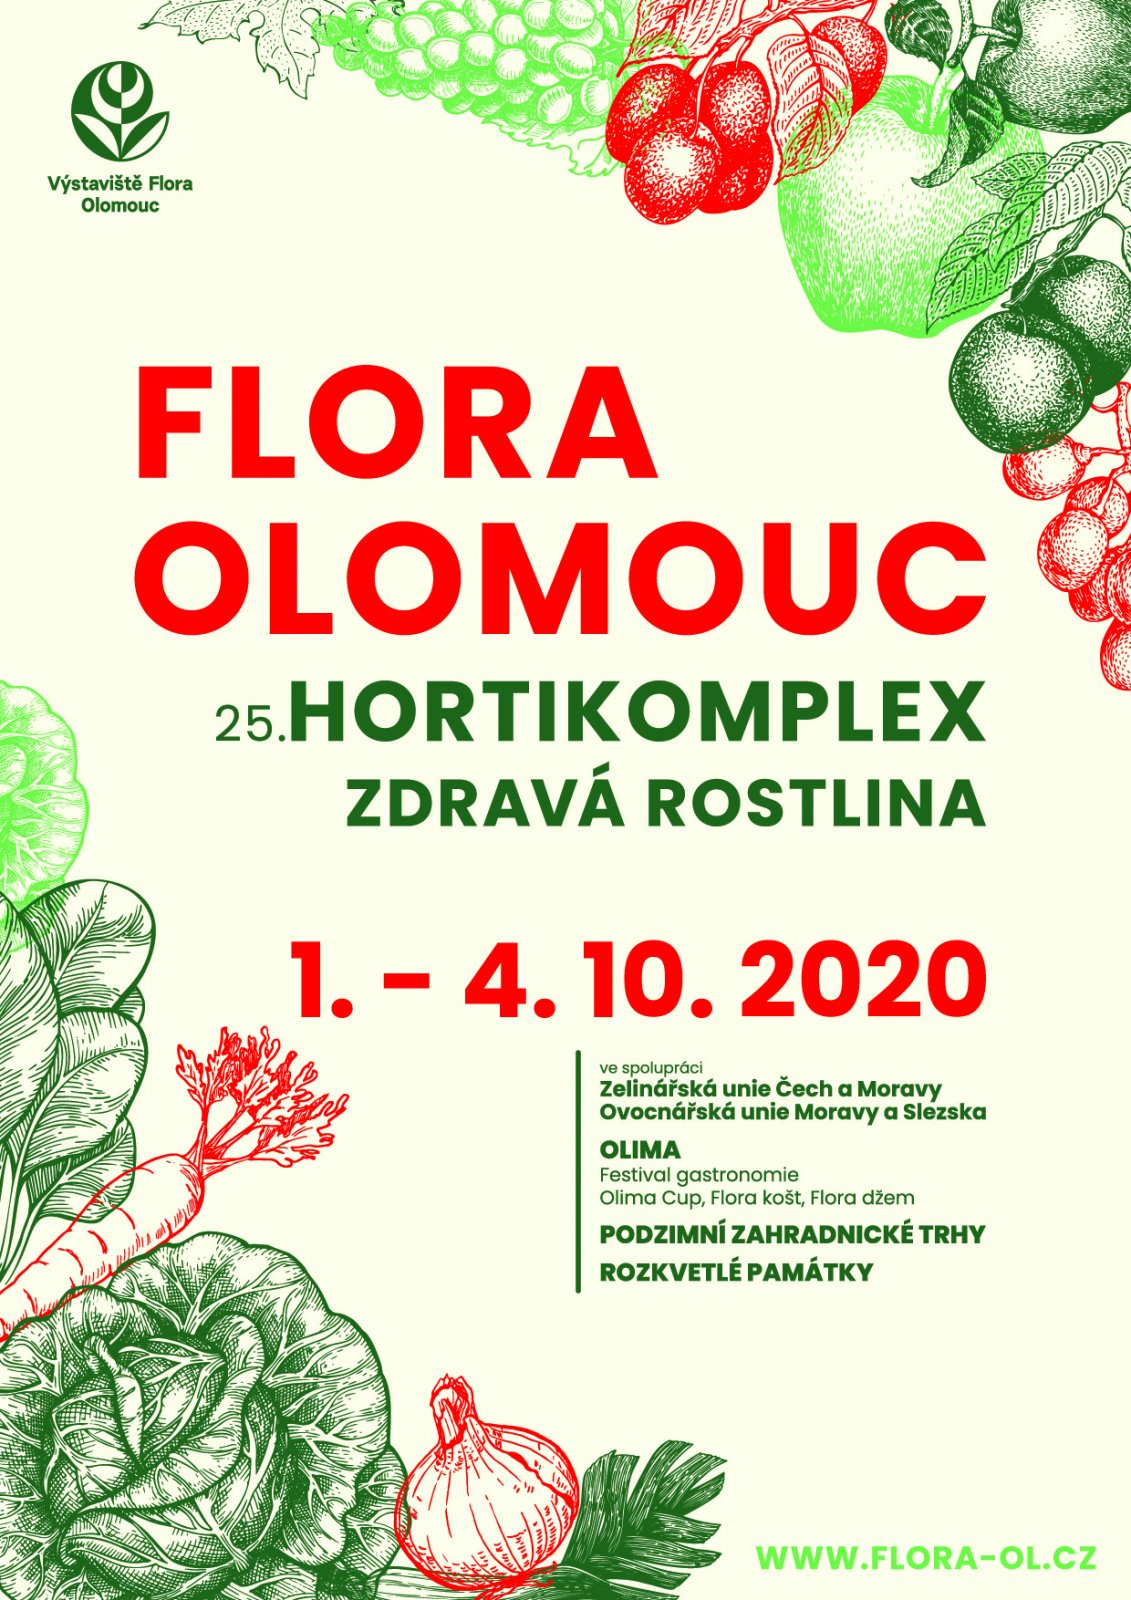 Flora Olomouc 2020 - Hortikomplex -Olomouc